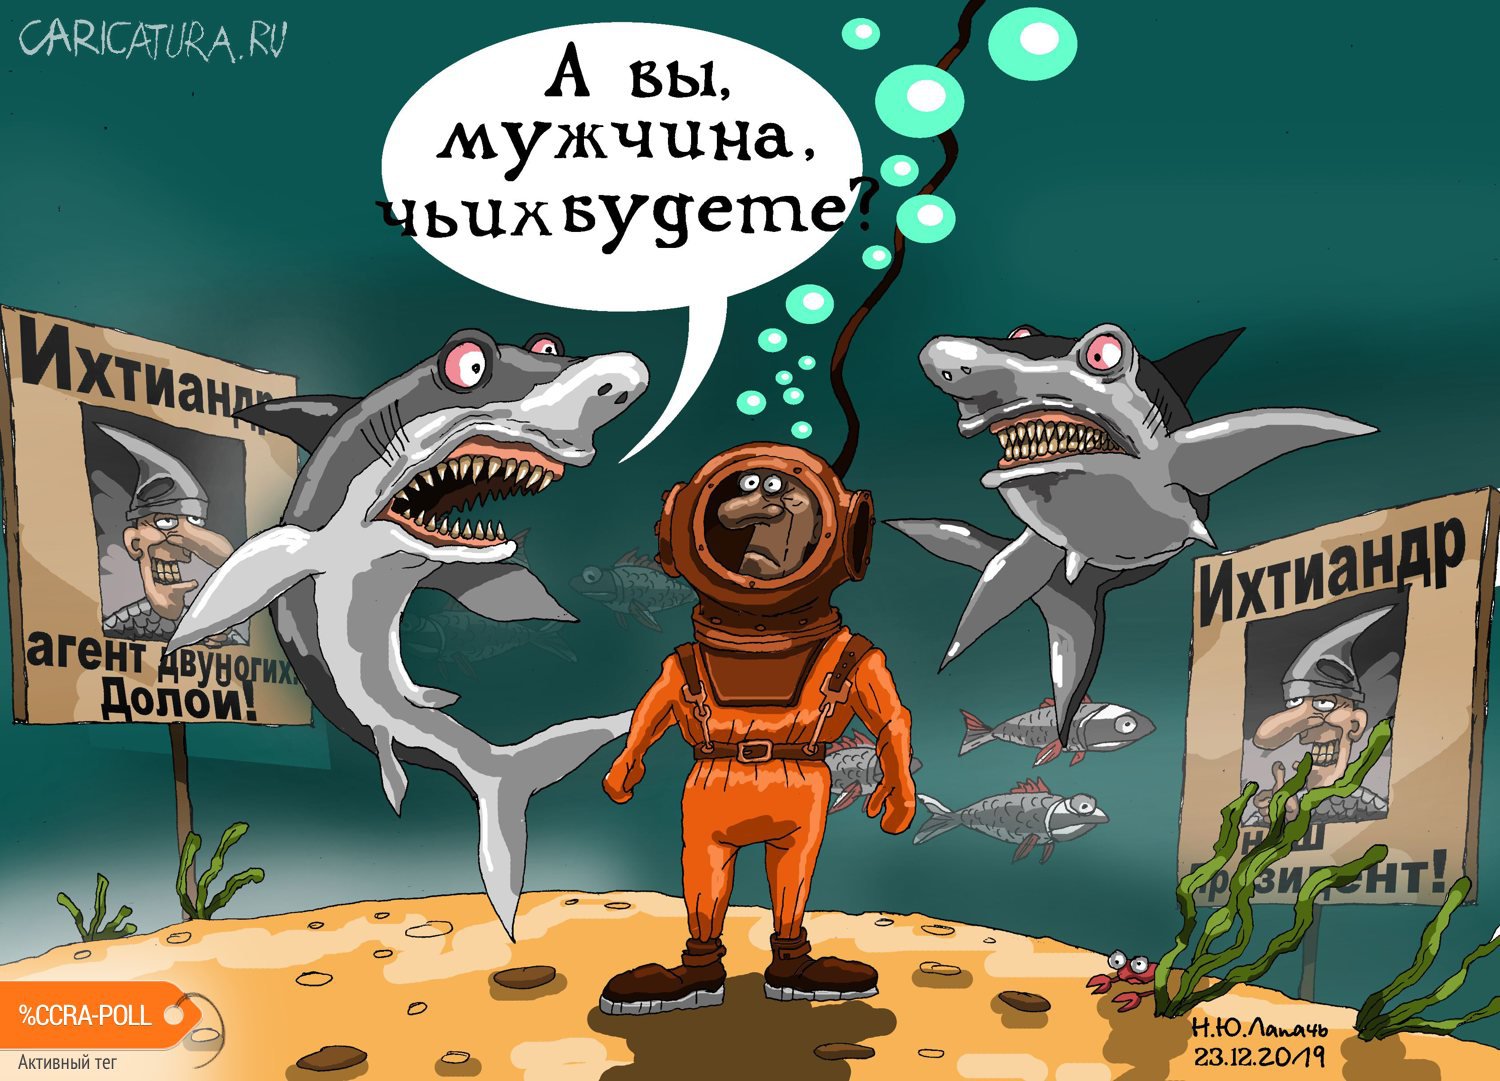 Карикатура "На дне", Теплый Телогрей